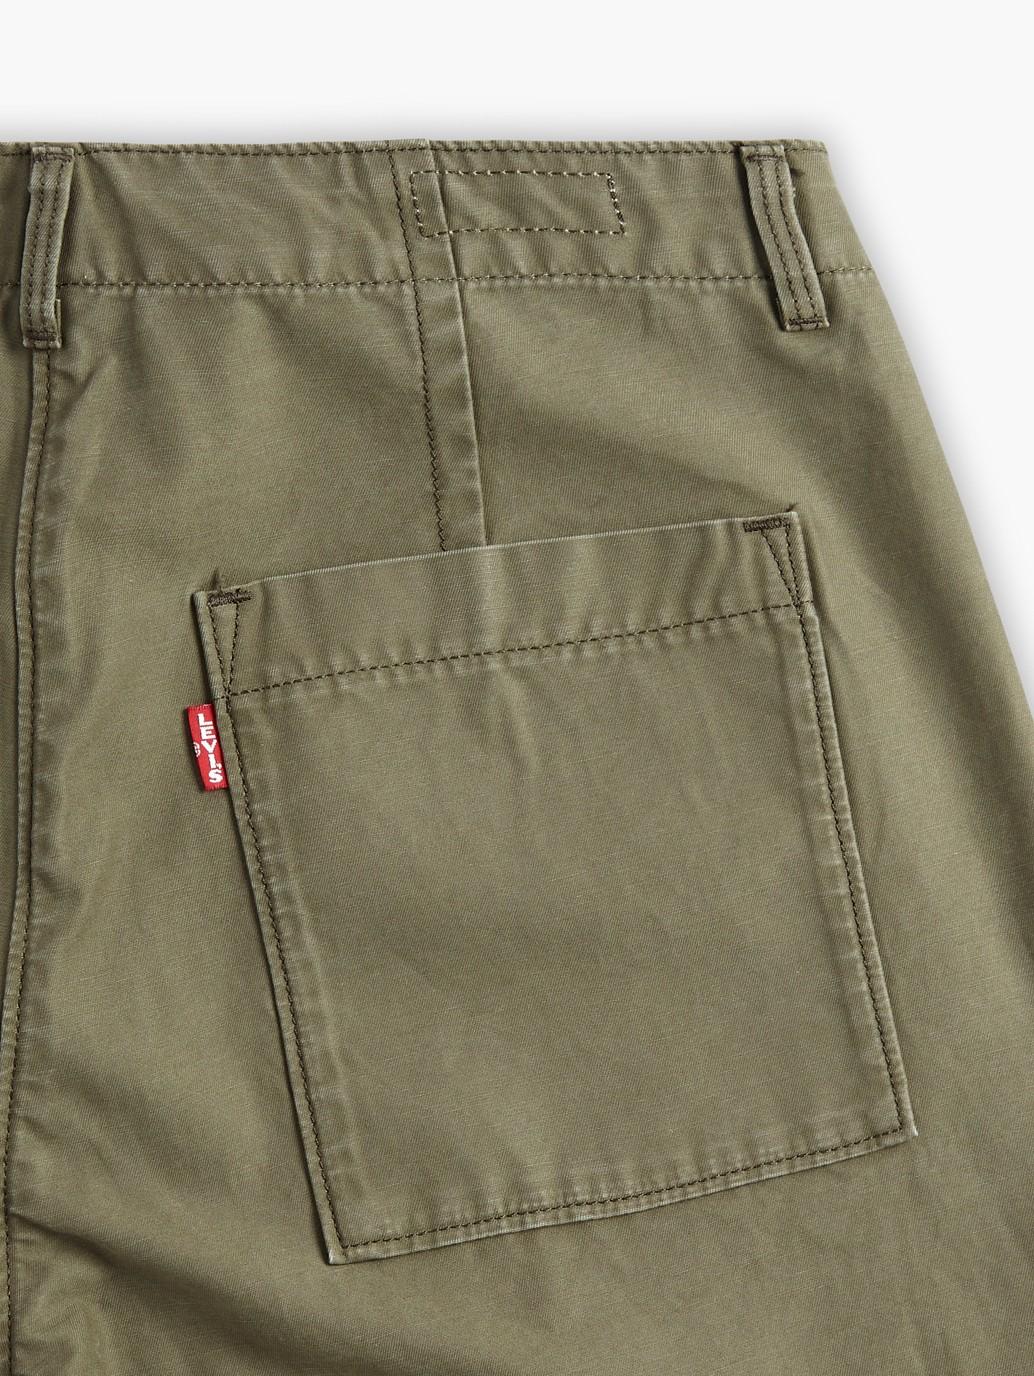 Buy Levi's® Women's Baggy Cargo Pants| Levi’s® Official Online Store PH